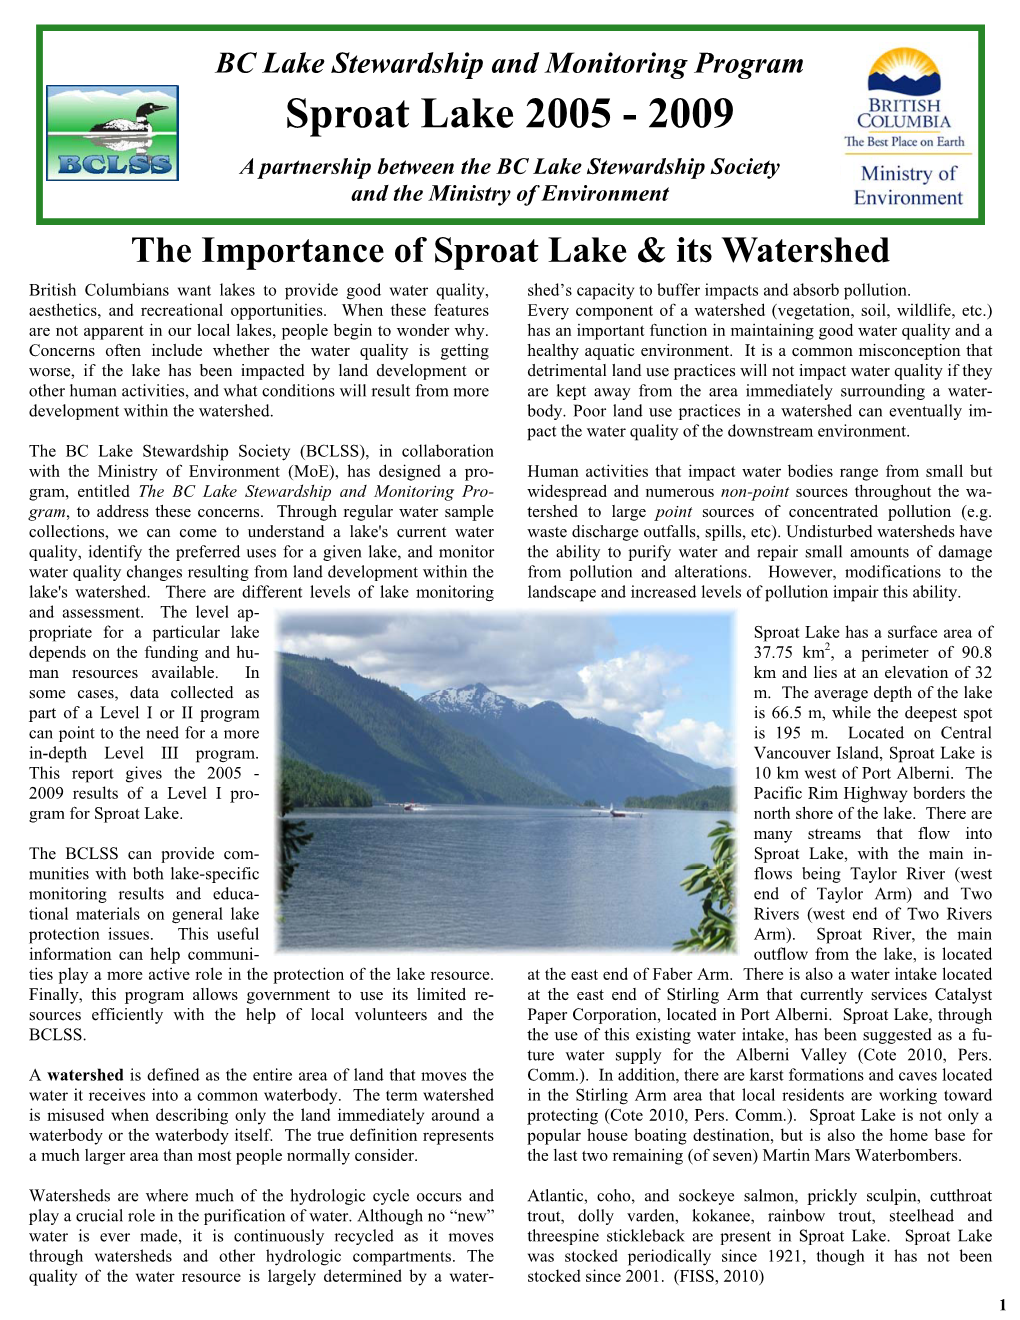 Sproat Lake 2005 - 2009